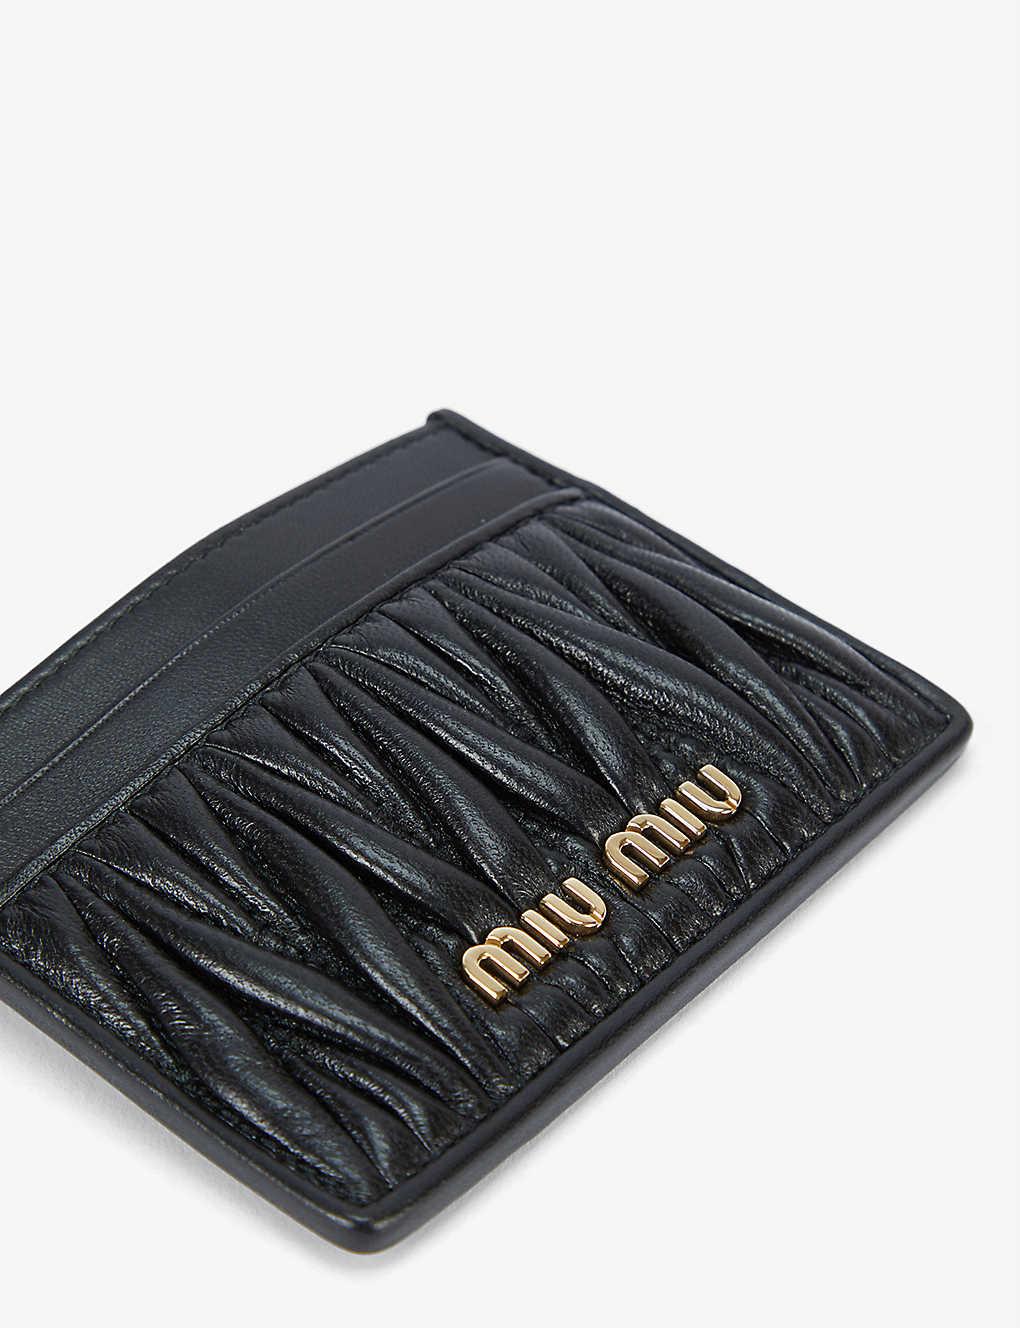 Miu Miu Matelassé Quilted Leather Card Holder in Nero (Black) - Lyst